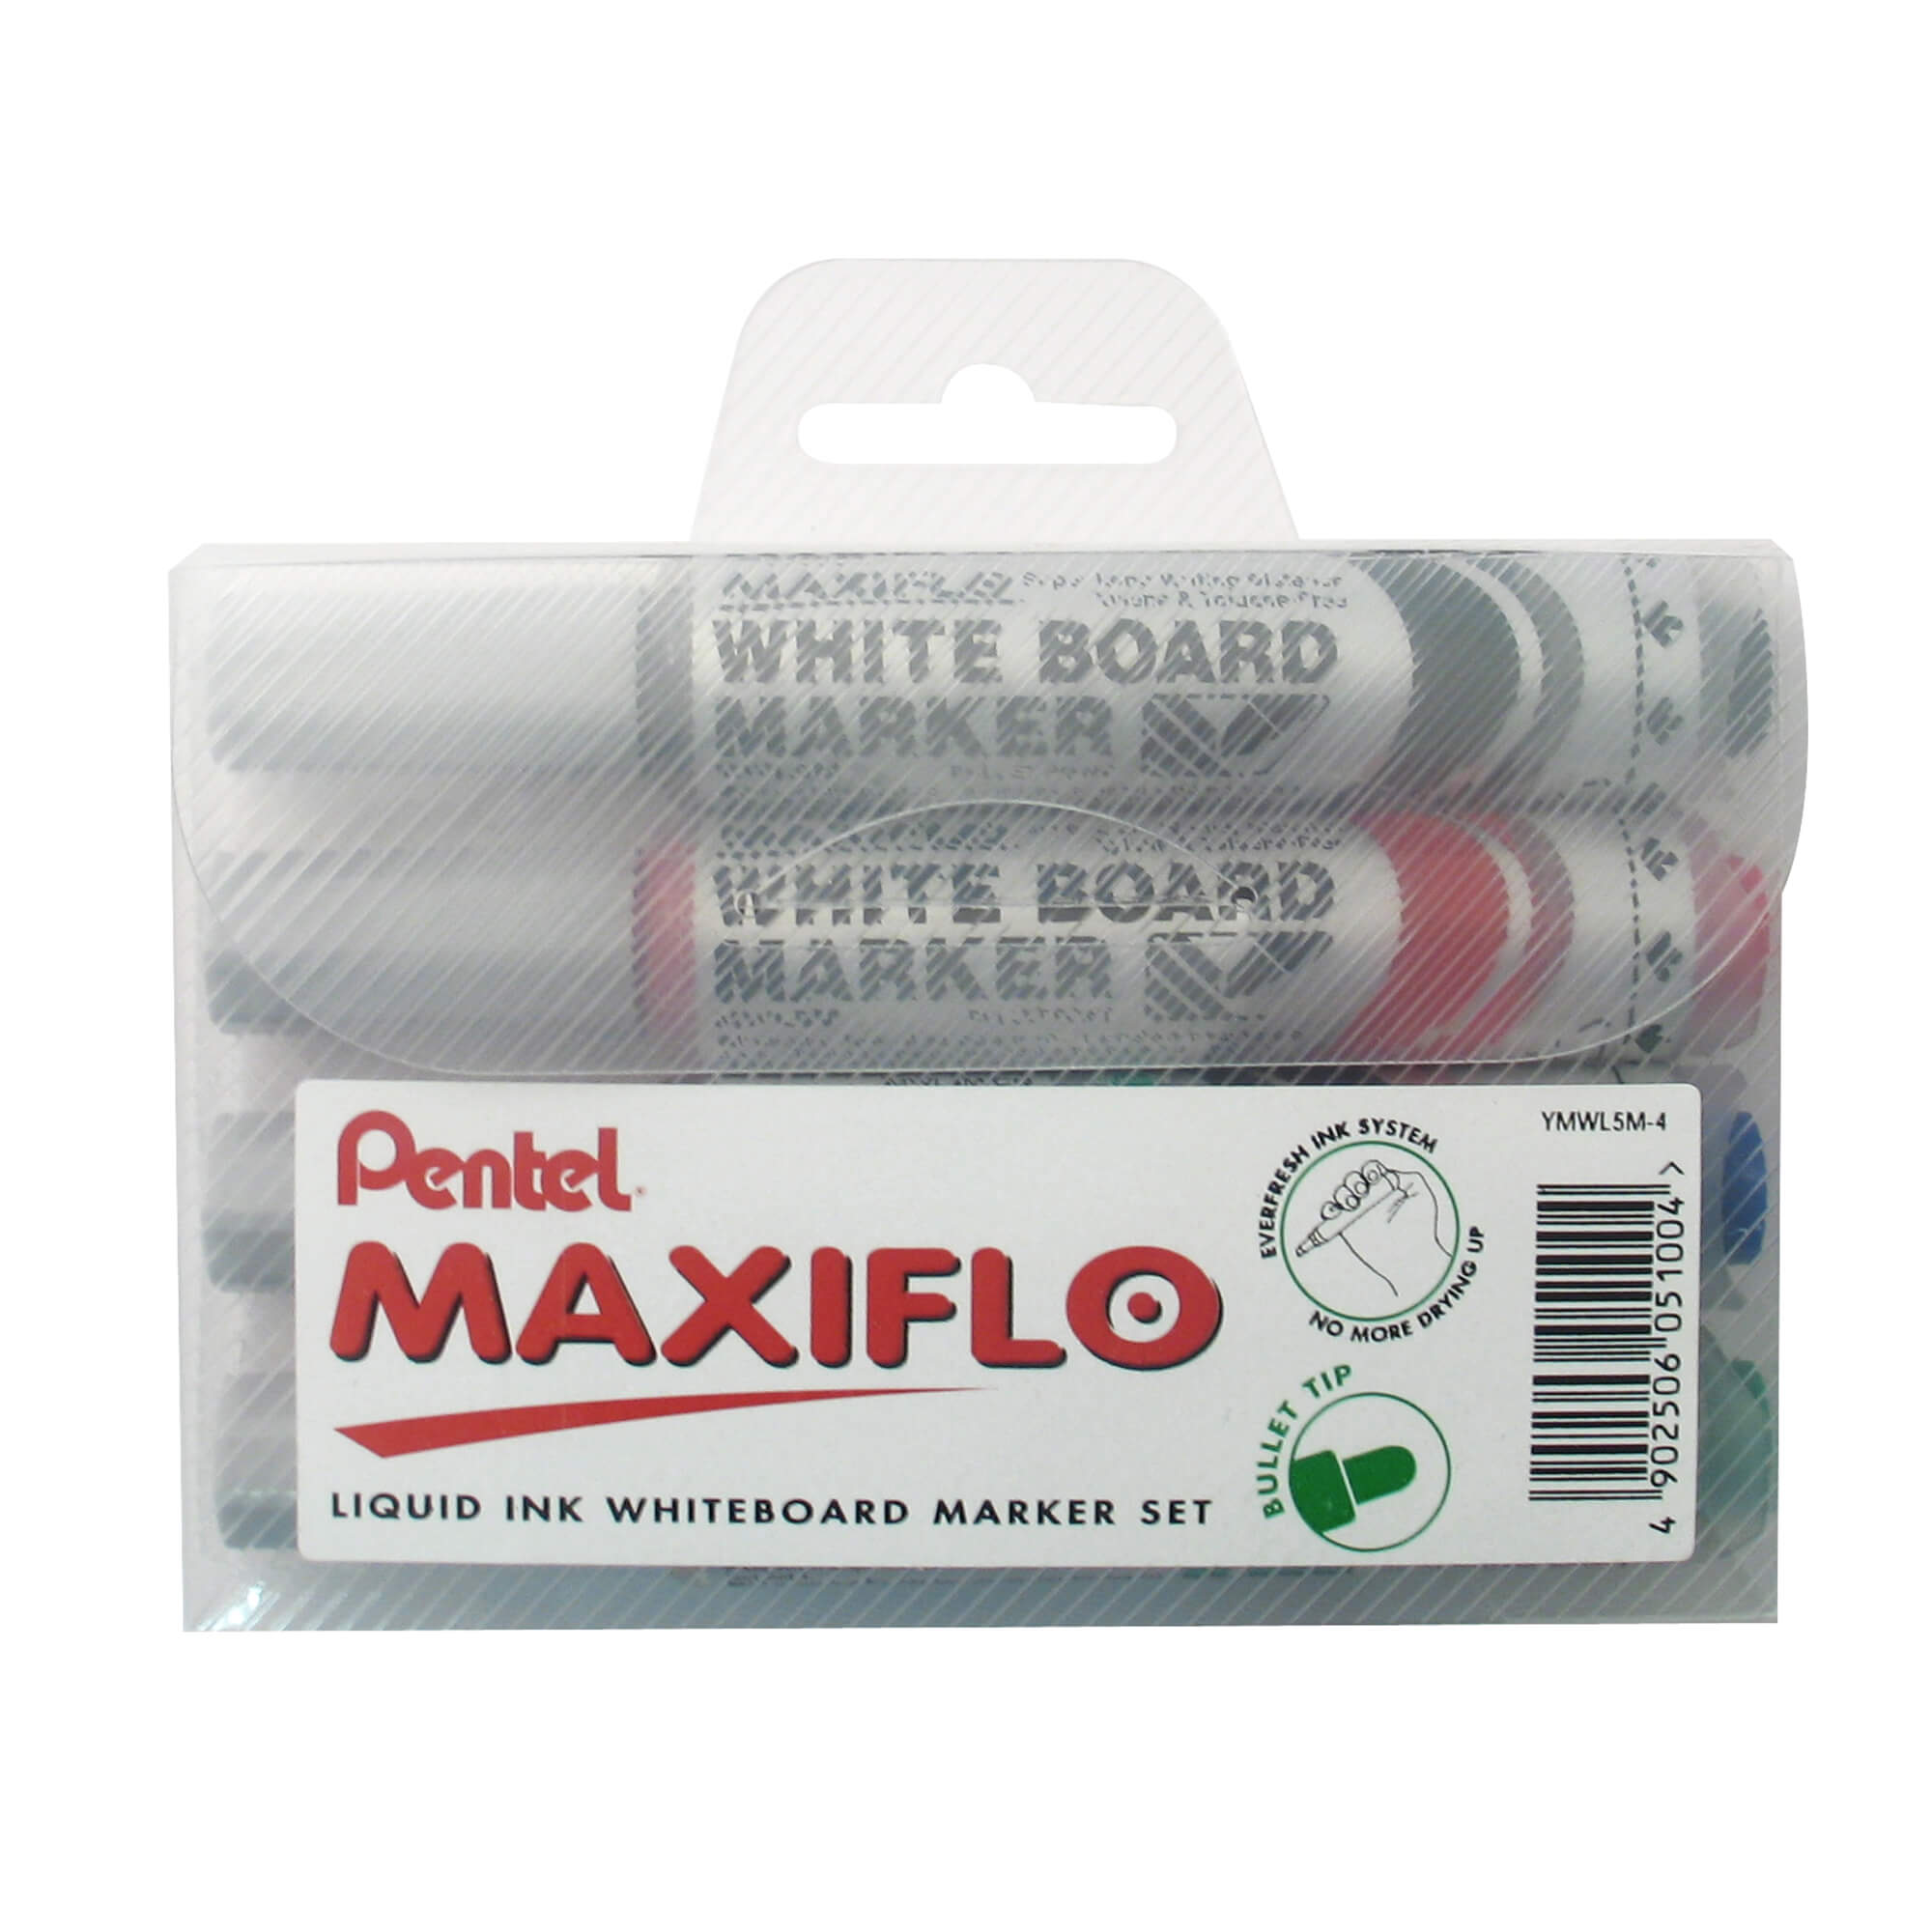 Pentel Maxiflo Medium Bullet Point Whiteboard Marker 4-piece wallet YMWL5M-4